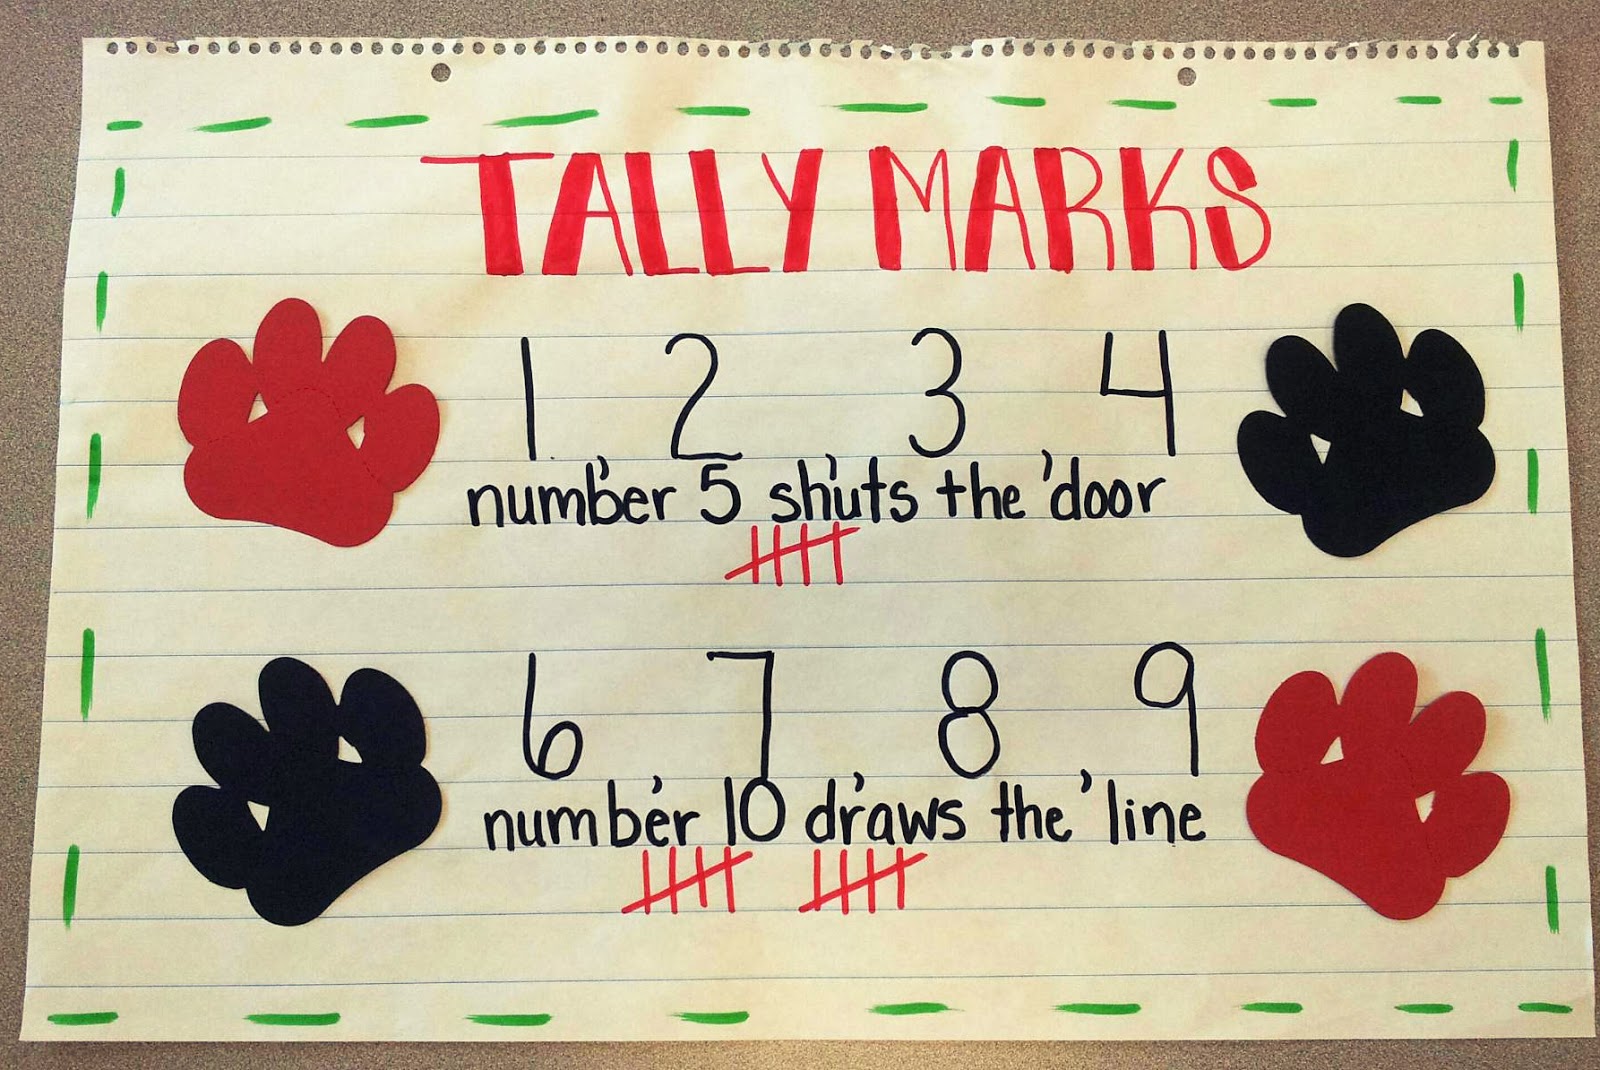 Tally Math. My teacher is Tall. Tall teachers